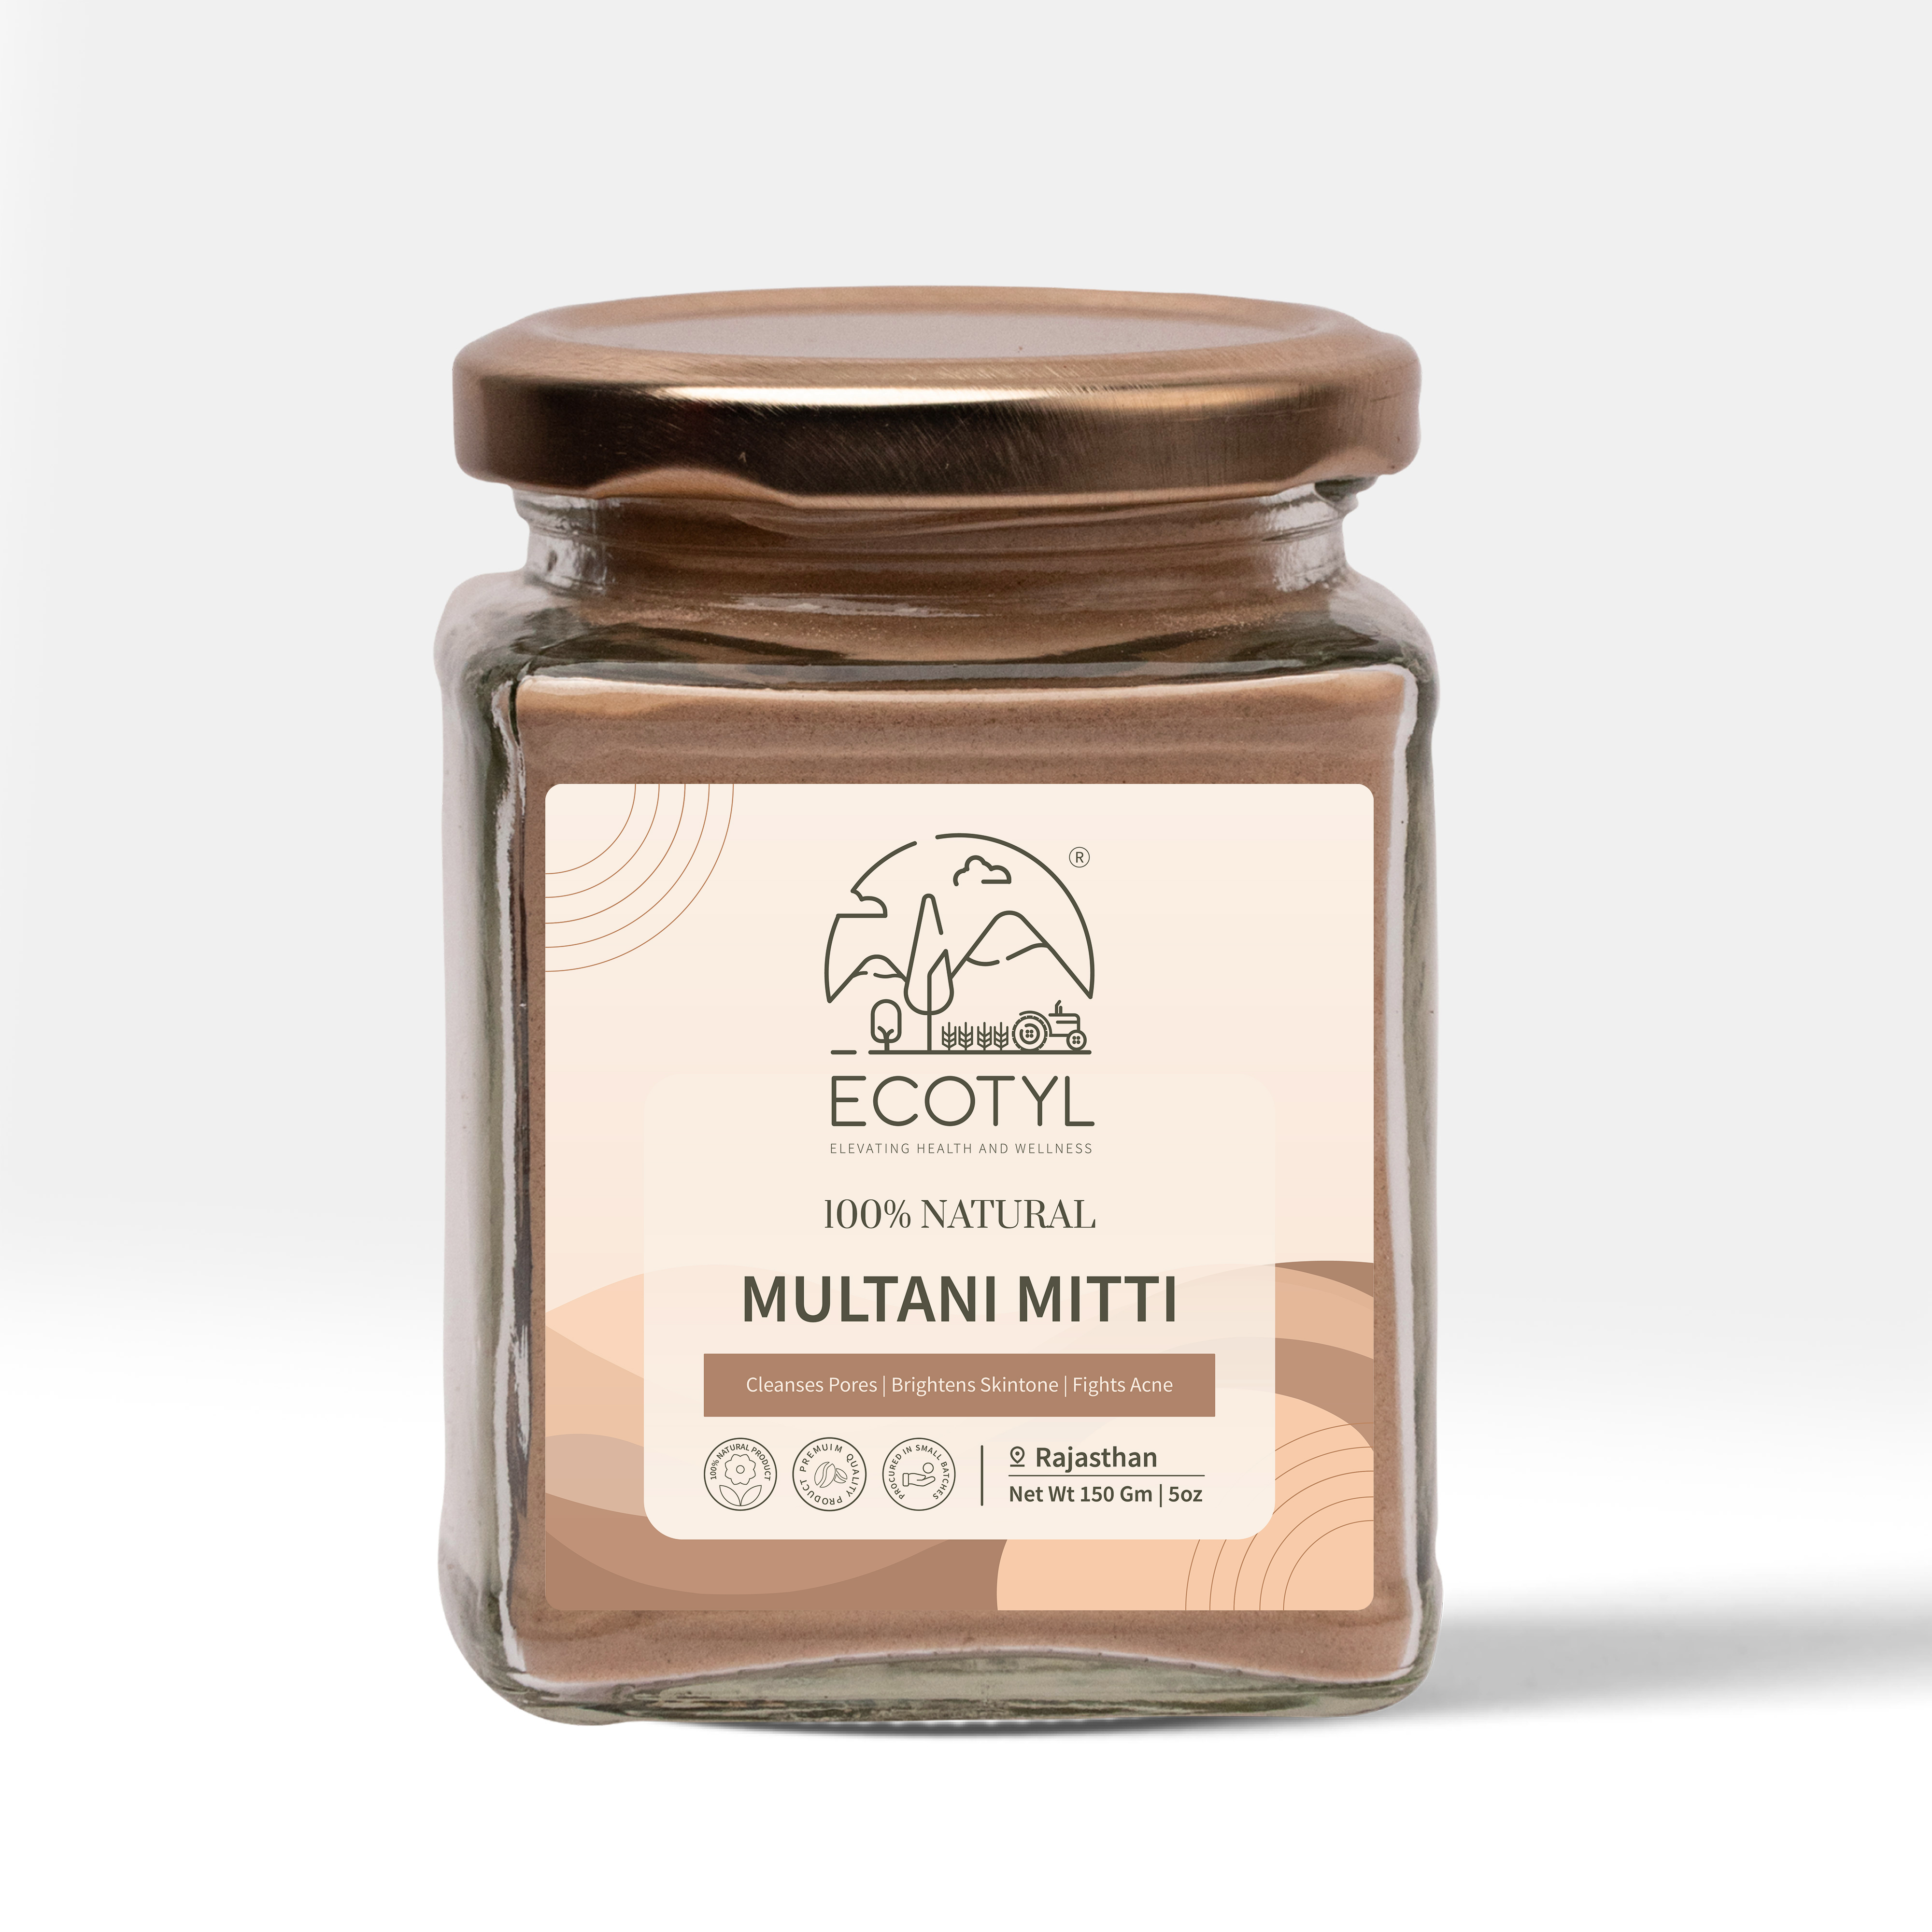 Buy Ecotyl Multani Mitti - 150 g at Best Price Online